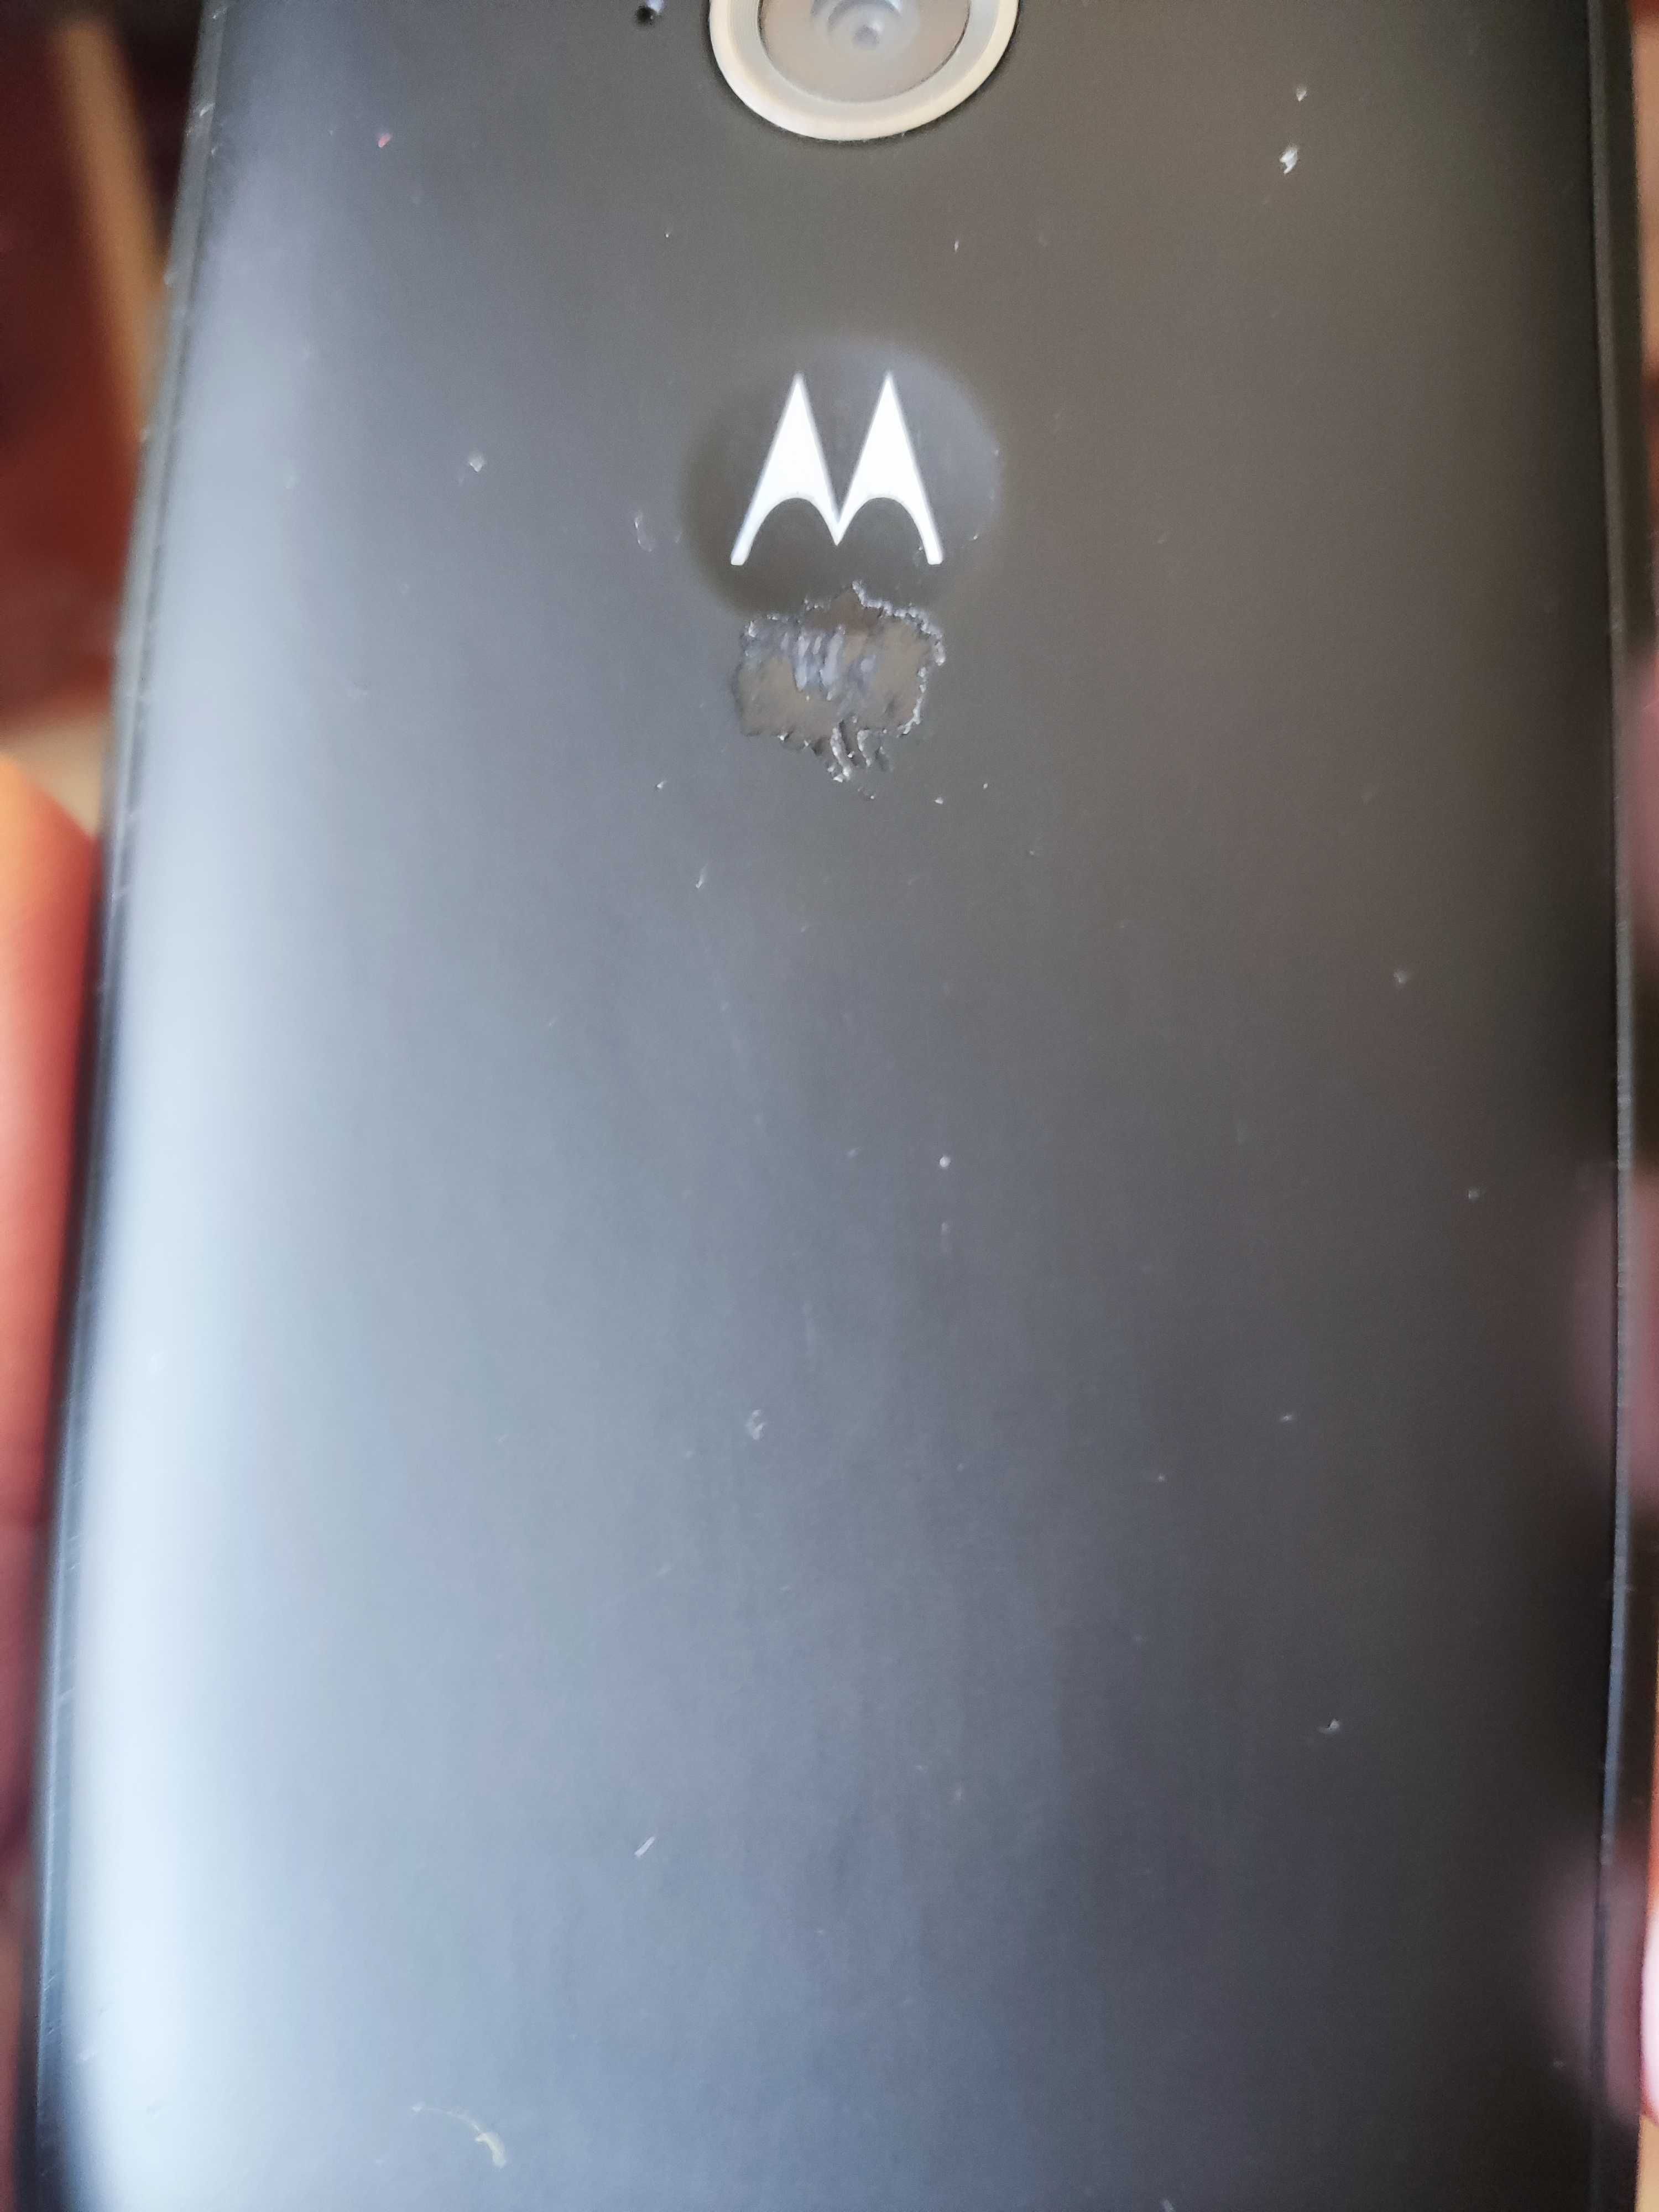 Telefon Motorola E 2nd Gen 4G